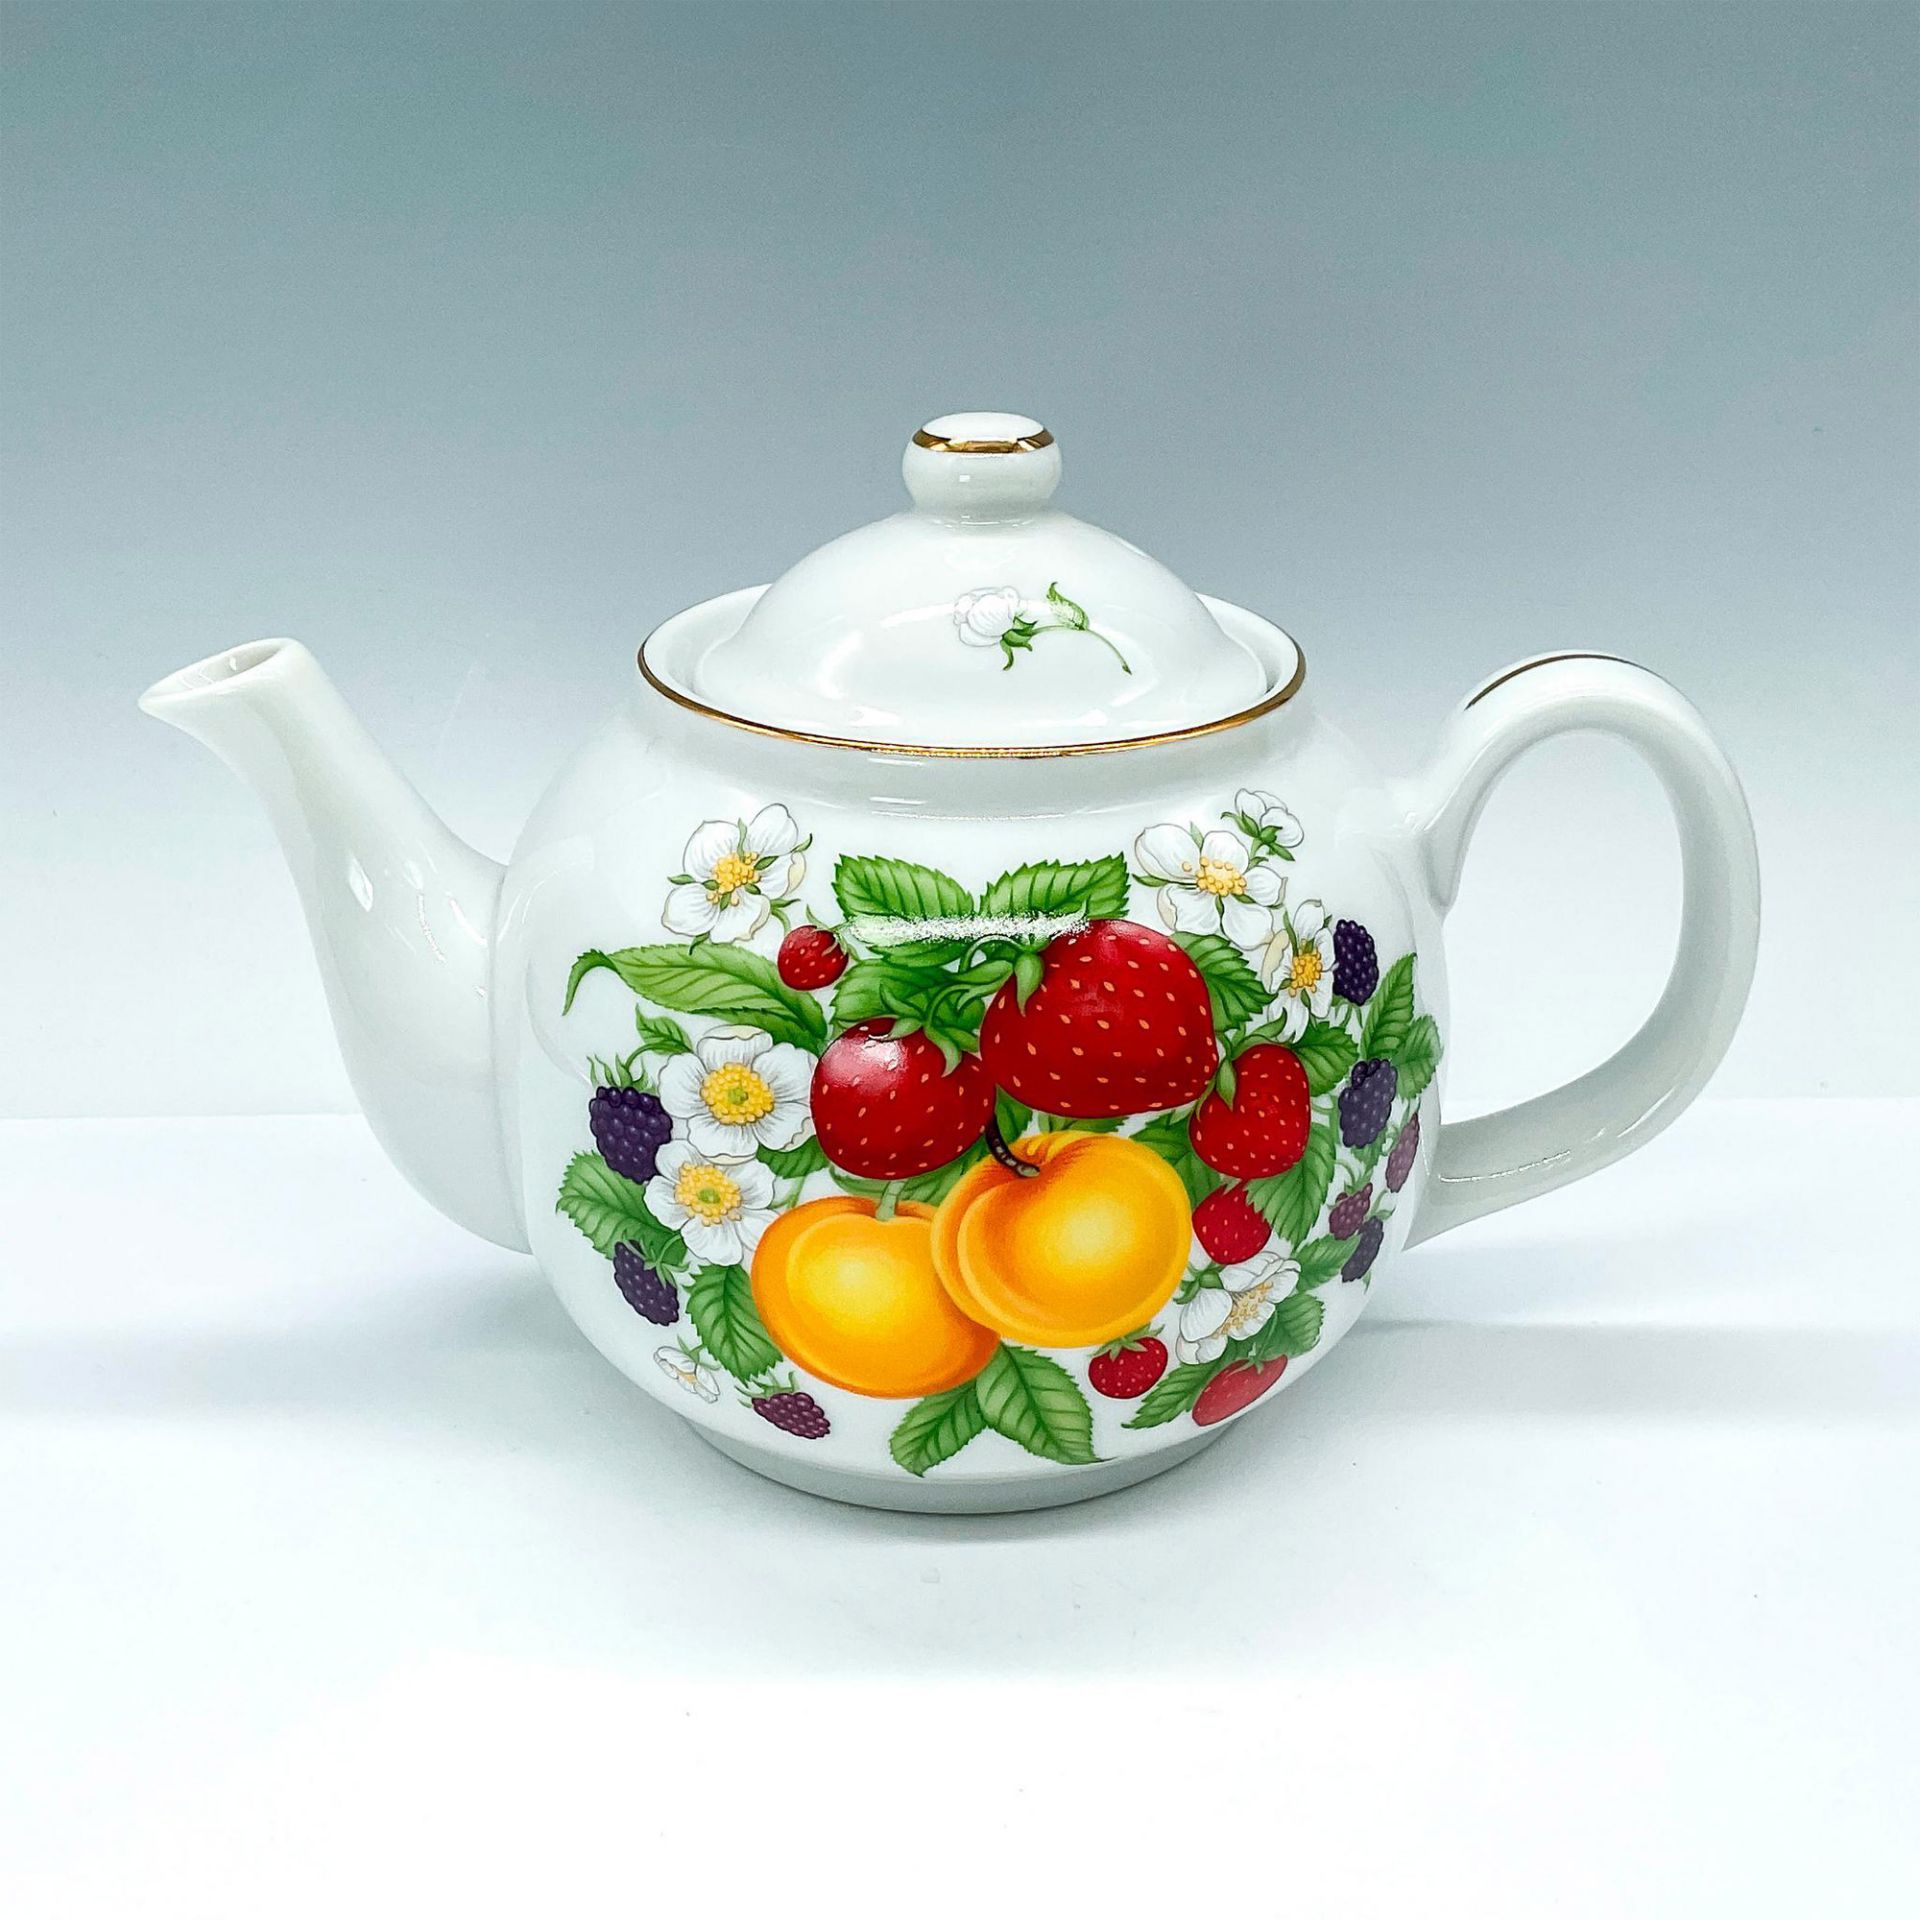 Lenox Porcelain Fruit Decorated Teapot - Image 2 of 3